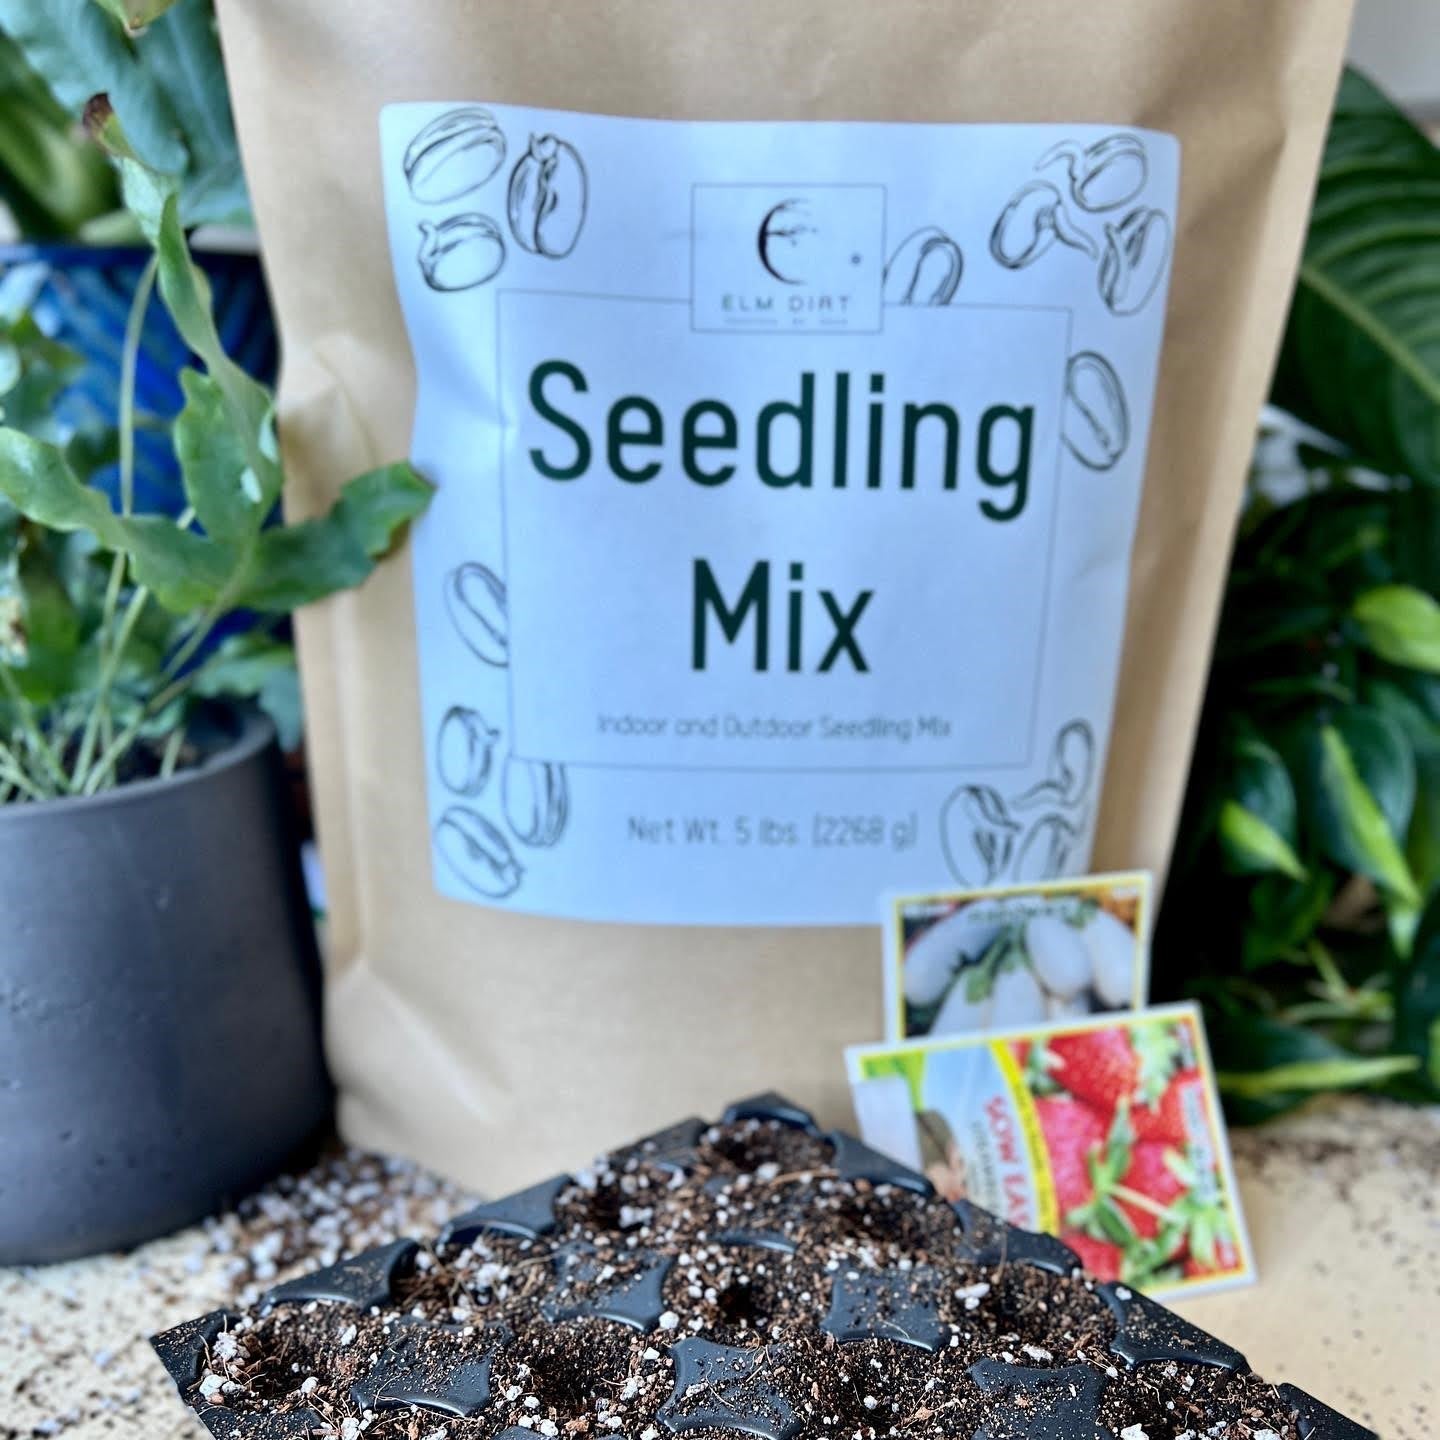 Seedling Mix by Elm Dirt